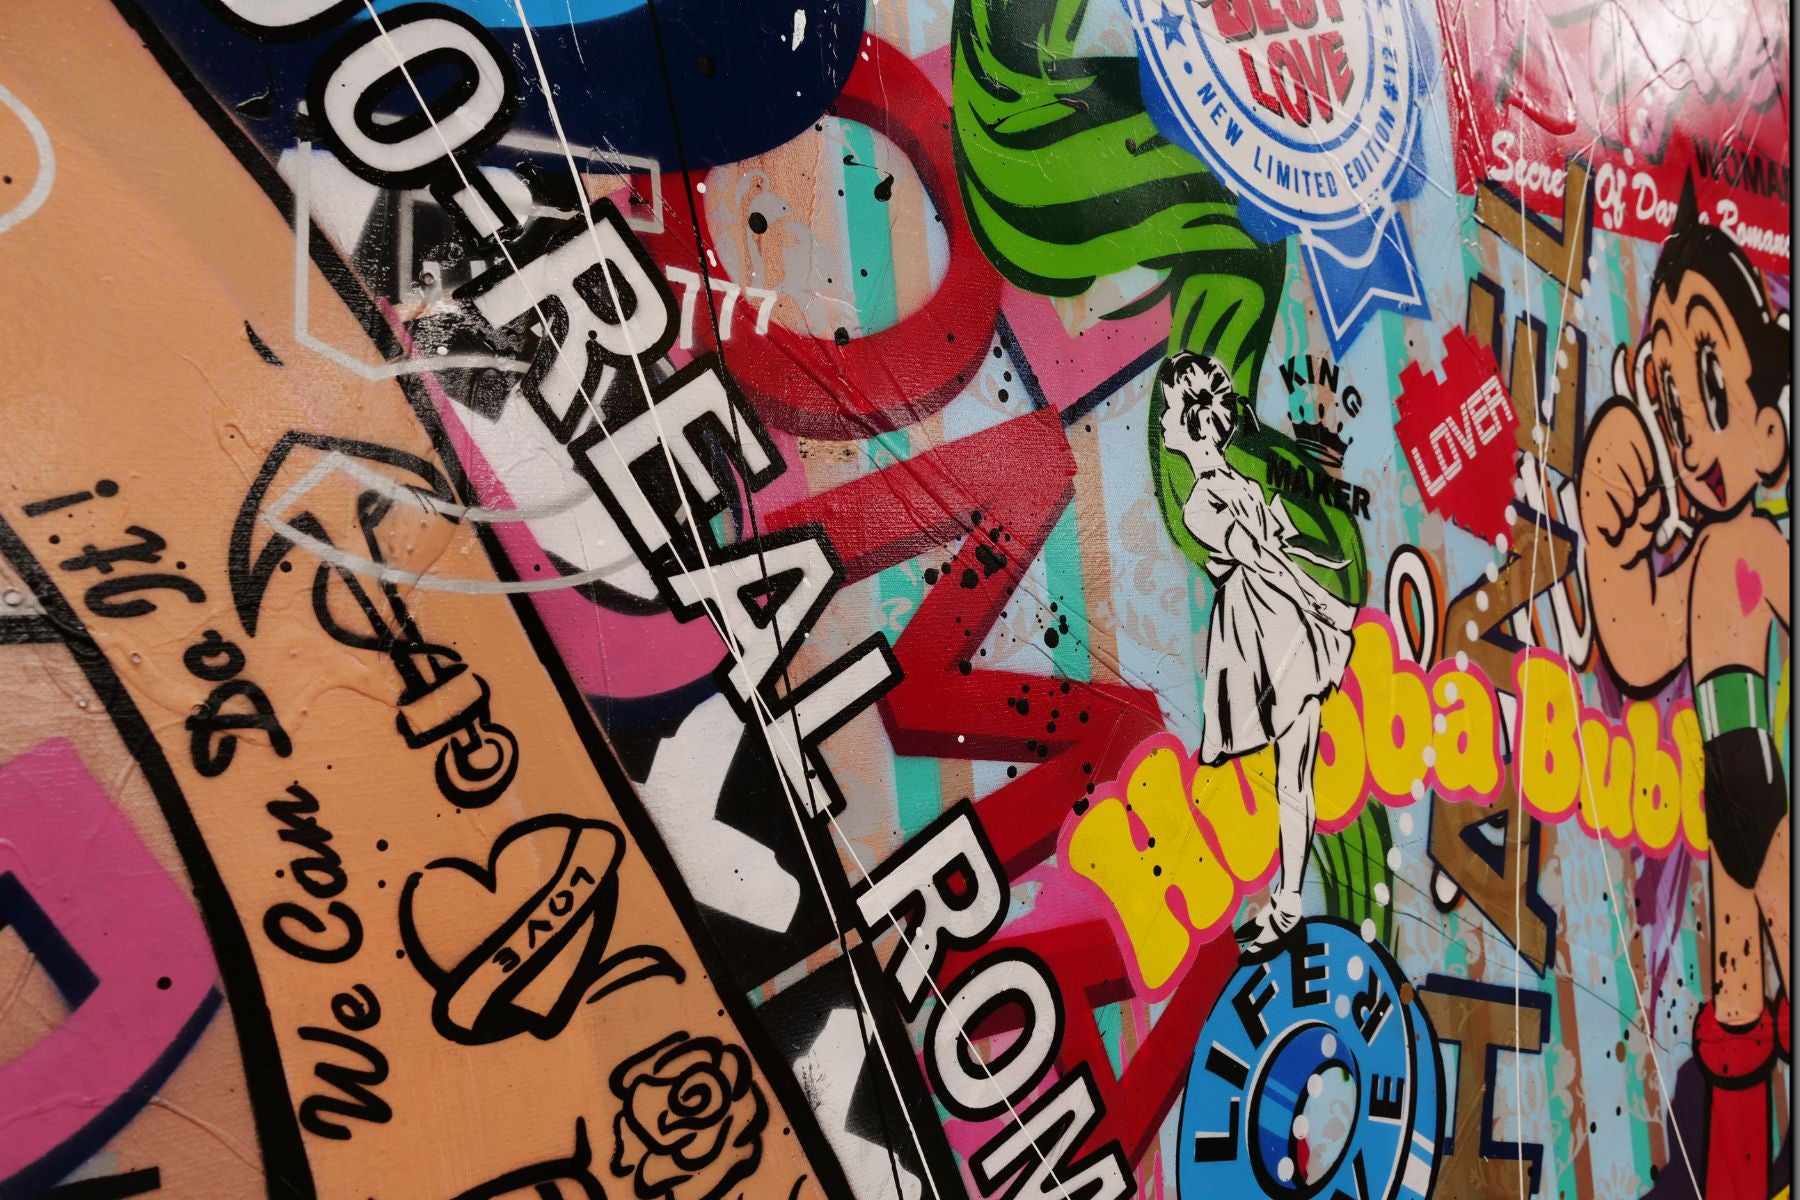 Be Your Own Hero - Rosie 250cm x 150cm Rosie The Riveter Textured Urban Pop Art Painting (SOLD)-Urban Pop Art-Franko-[Franko]-[Australia_Art]-[Art_Lovers_Australia]-Franklin Art Studio